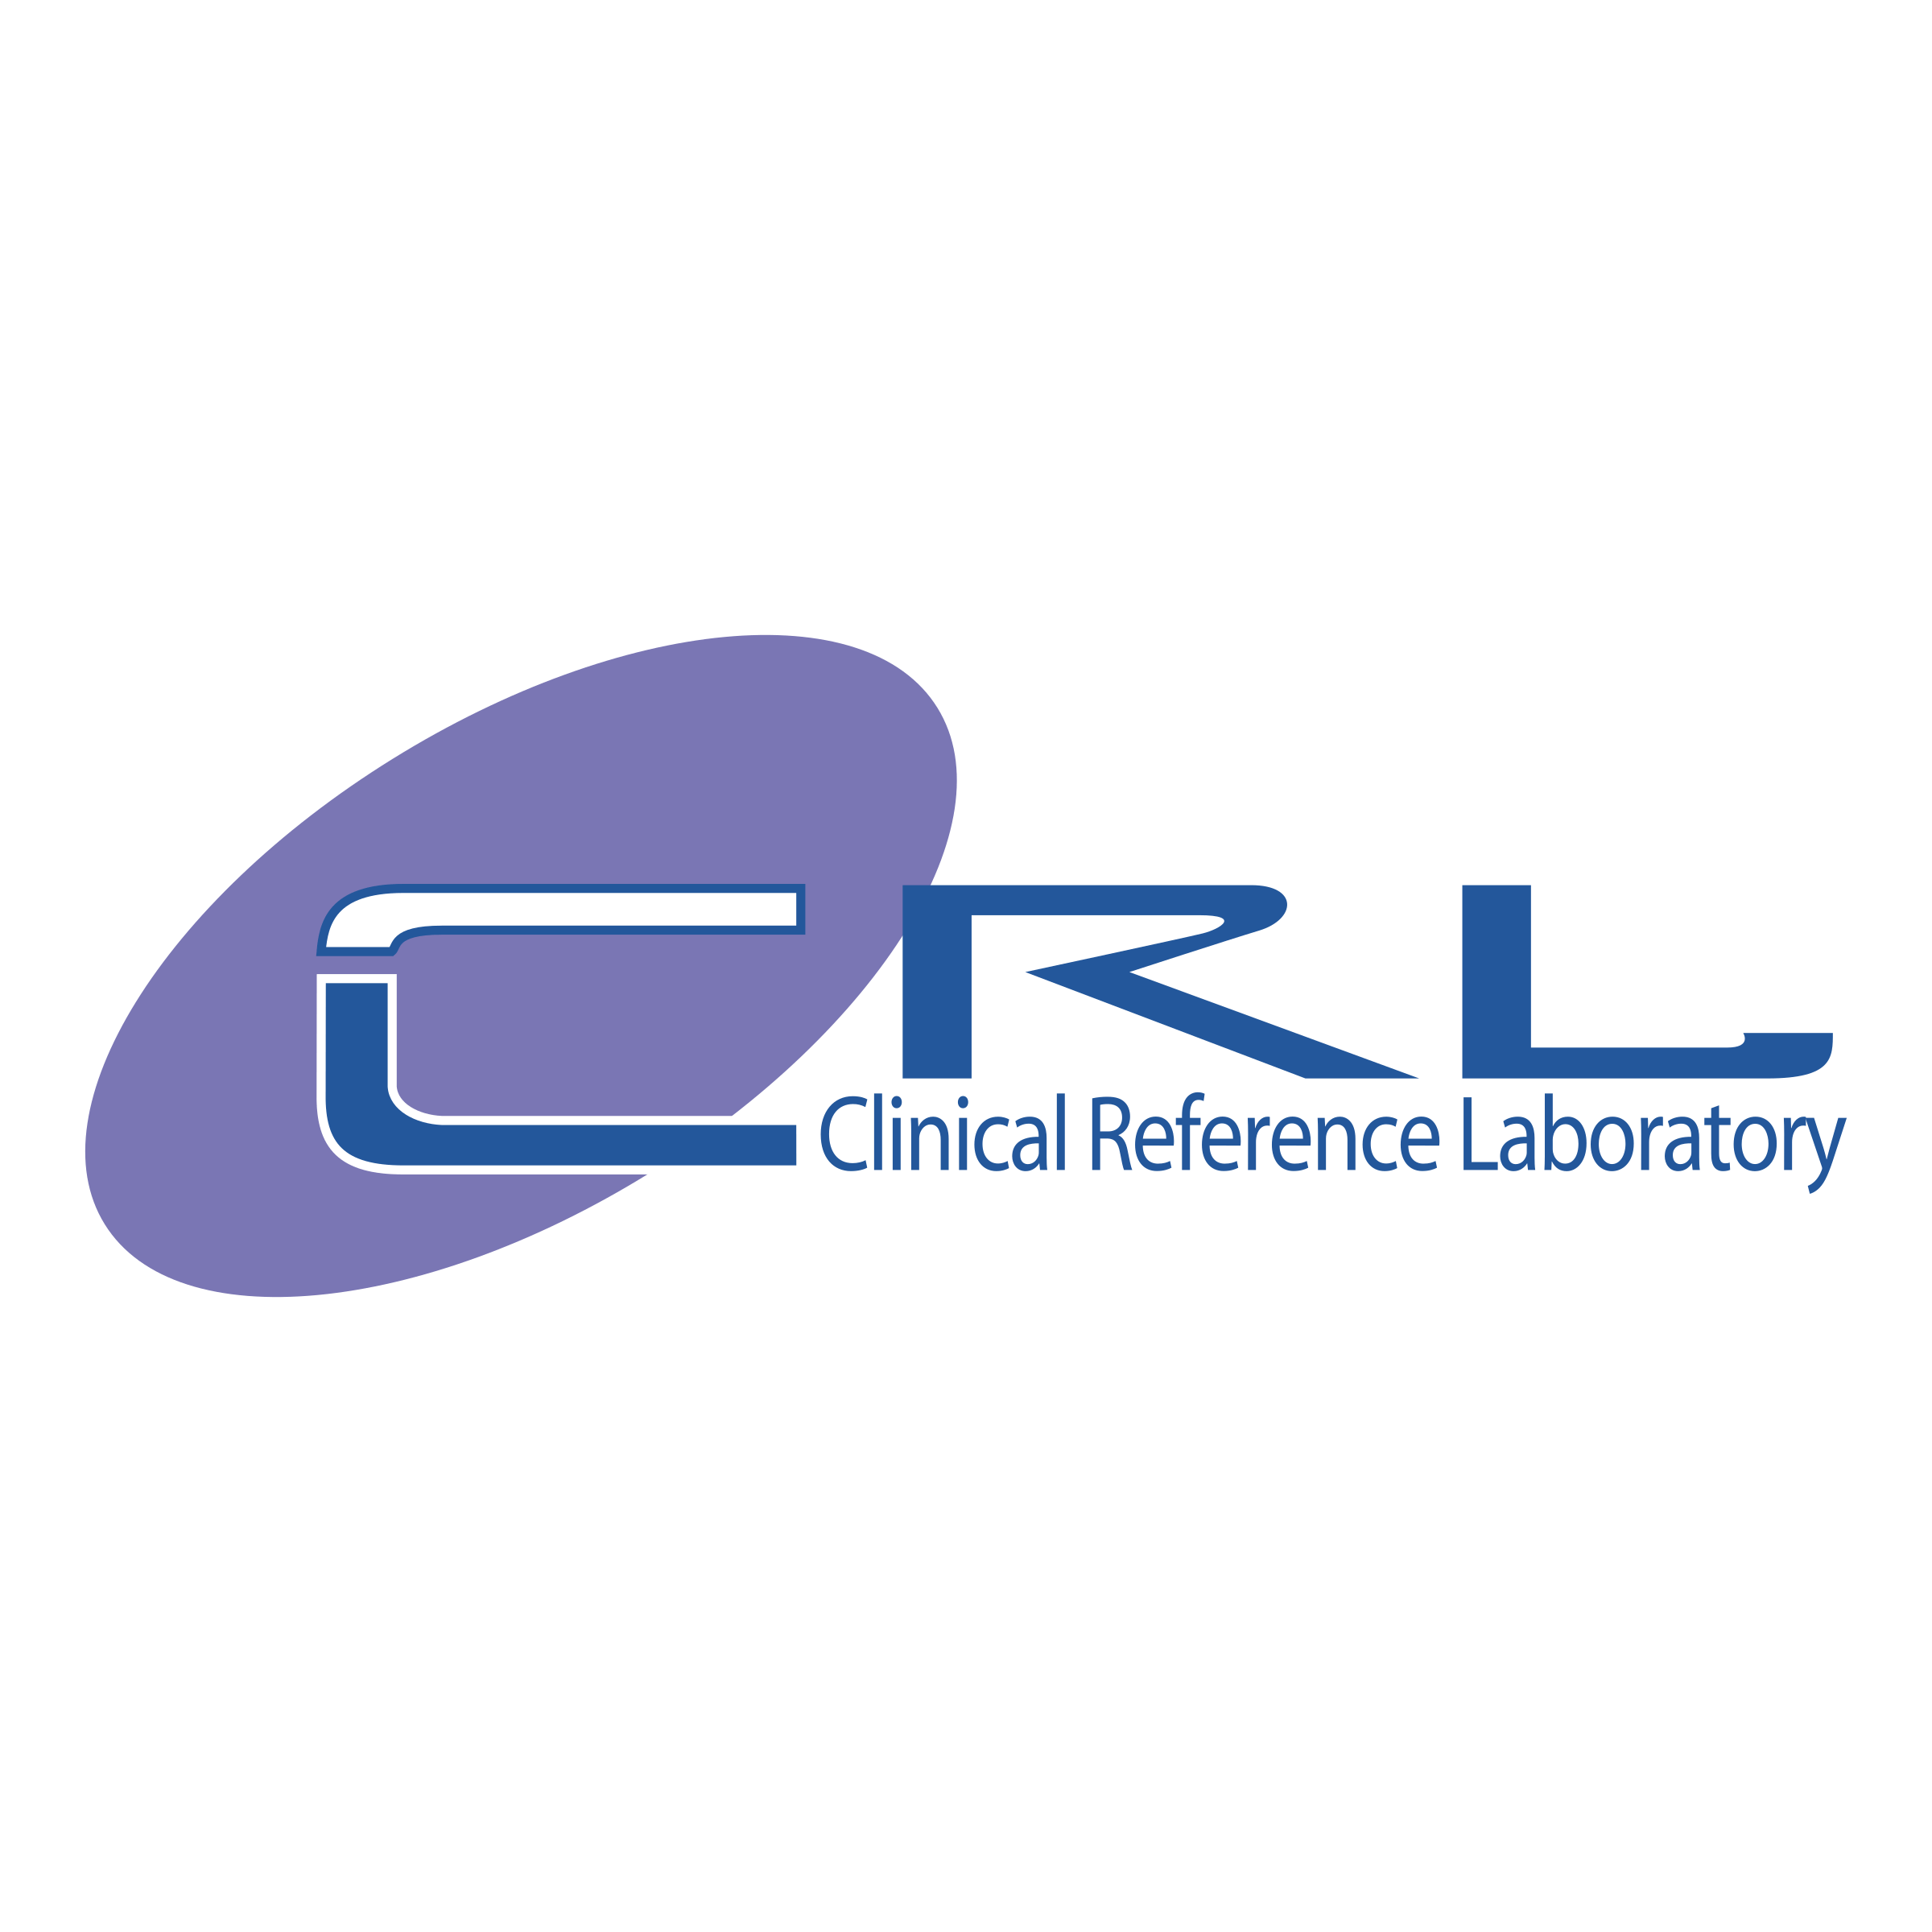 CRL Logo - CRL Logo PNG Transparent & SVG Vector